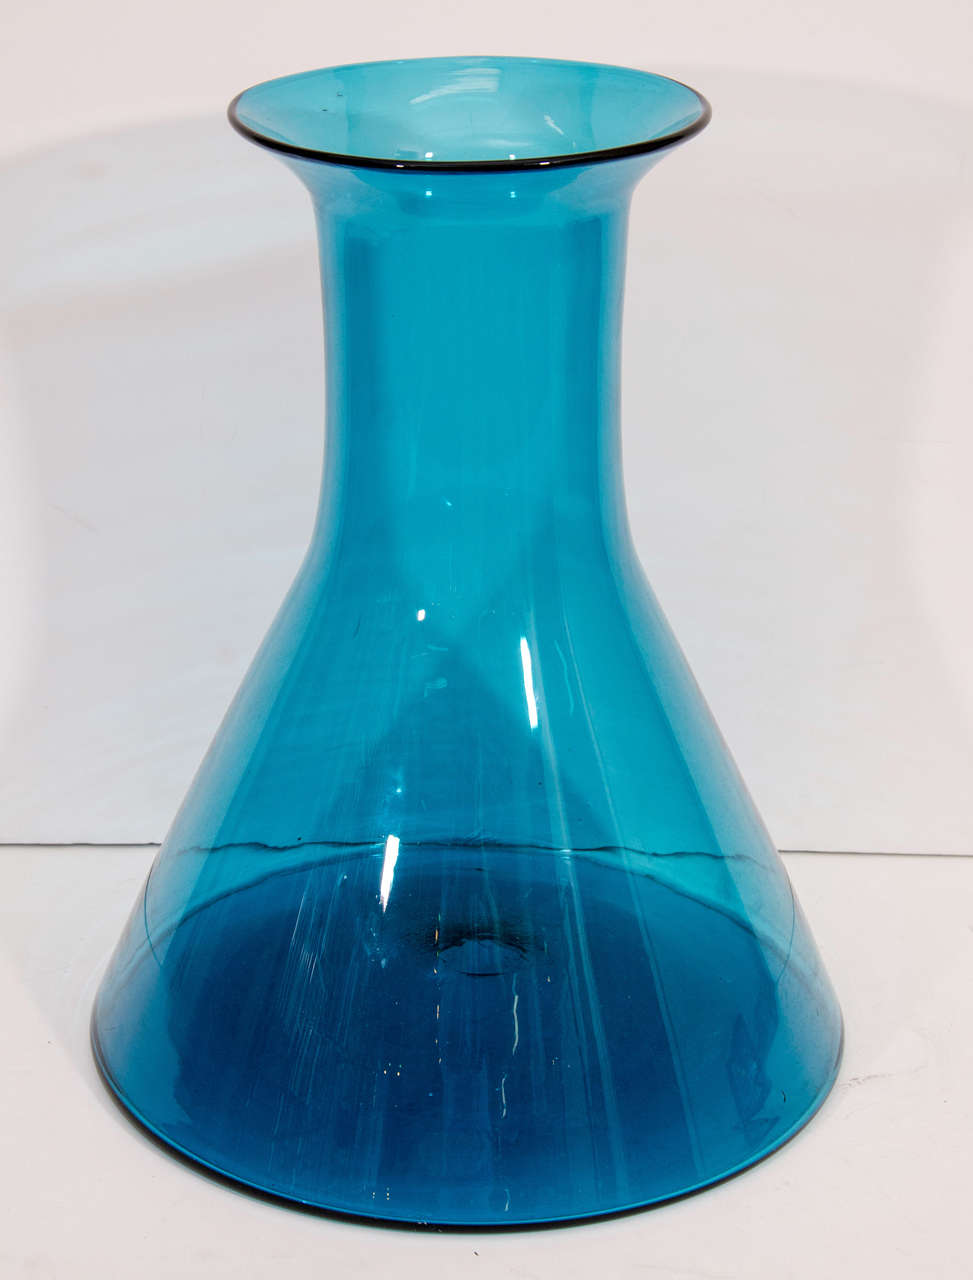 A vintage large electric blue glass vase by Wayne Husted for Blenko Glass.